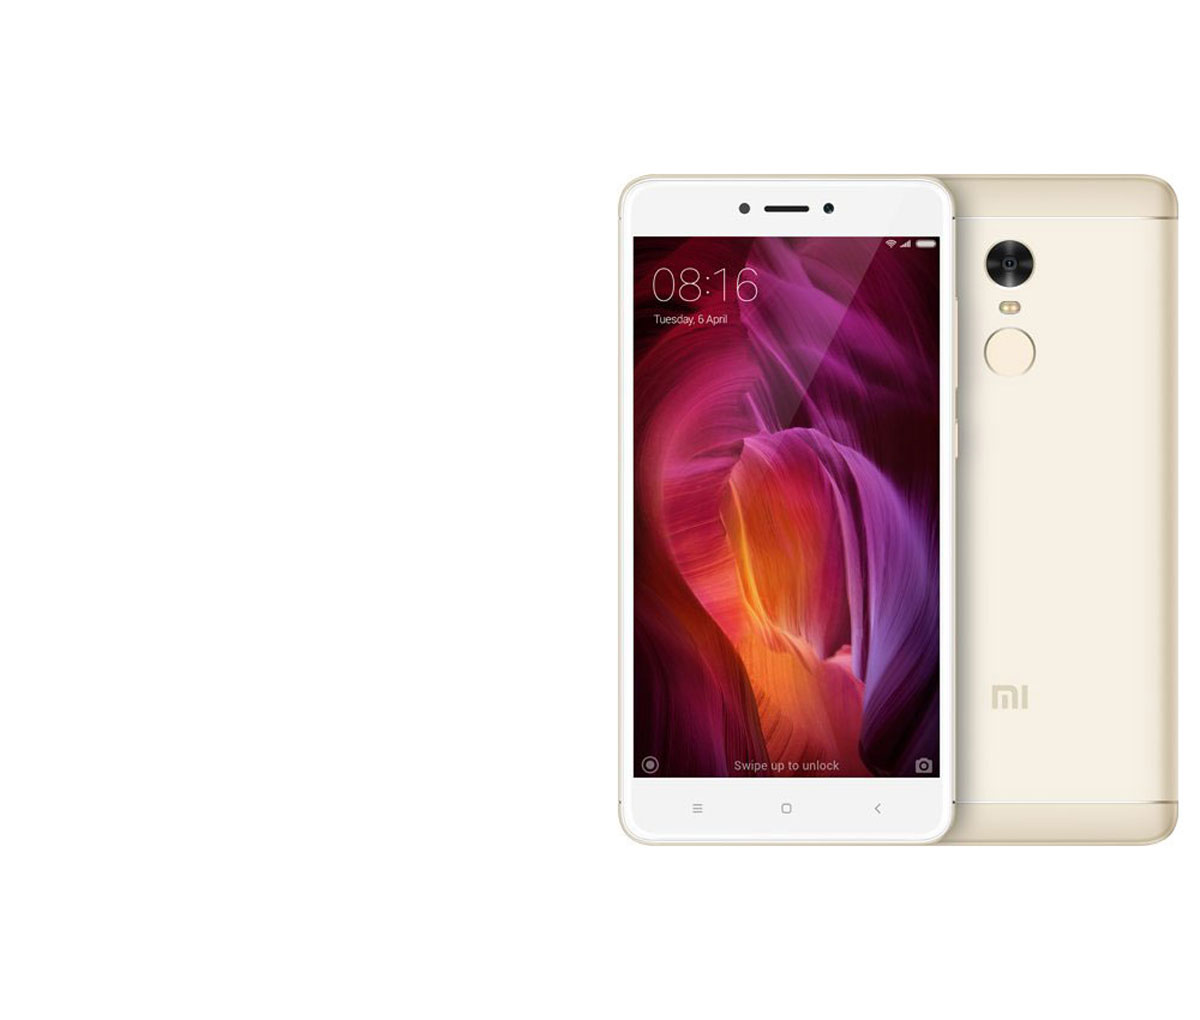 Xiaomi Redmi Note 4 Global Version 3GB/32GB Dual Sim mobilní telefon, mobil, smartphone.